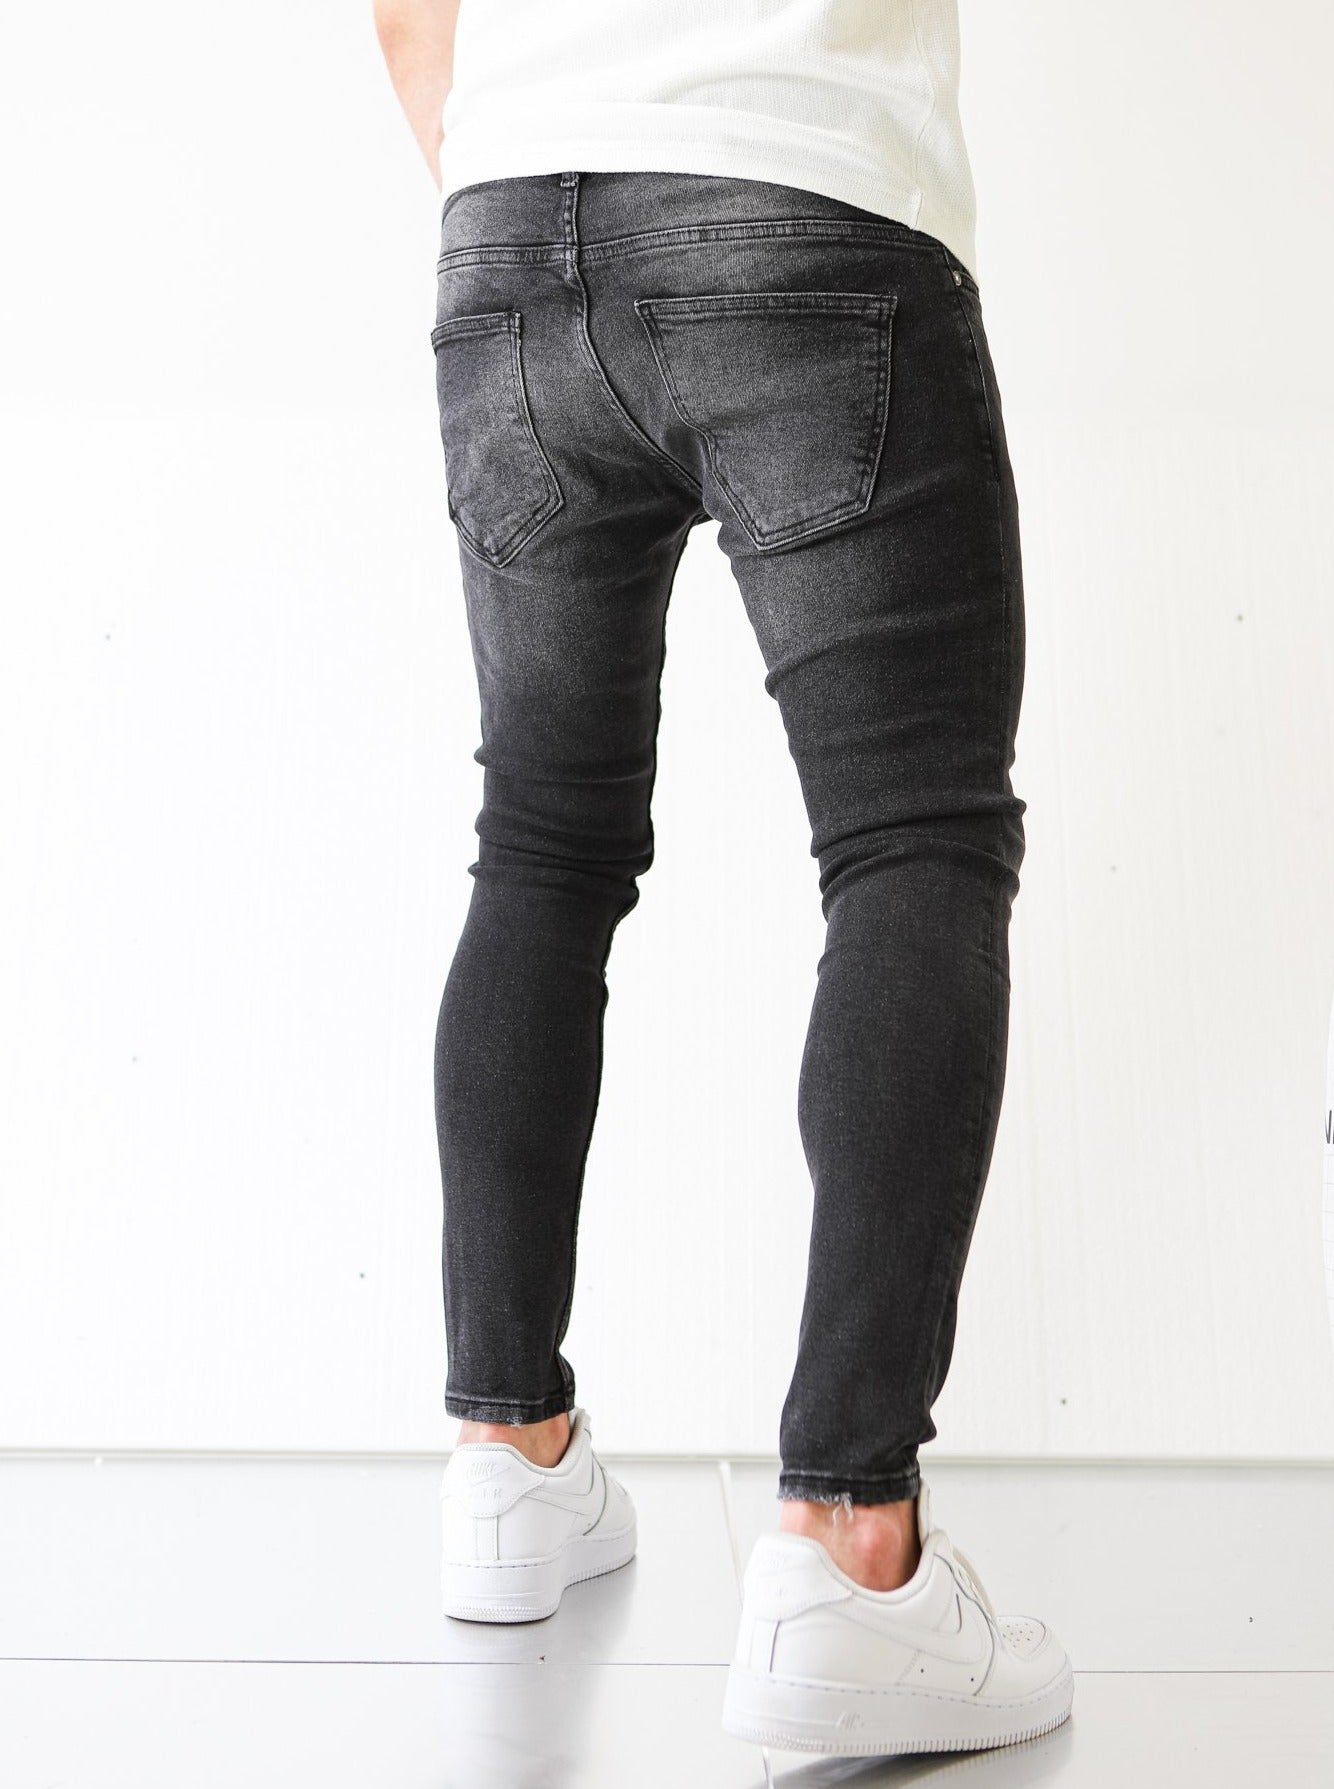 Premium Basic Black Skinny Jeans - UNEFFECTED STUDIOS® - JEANS - UNEFFECTED